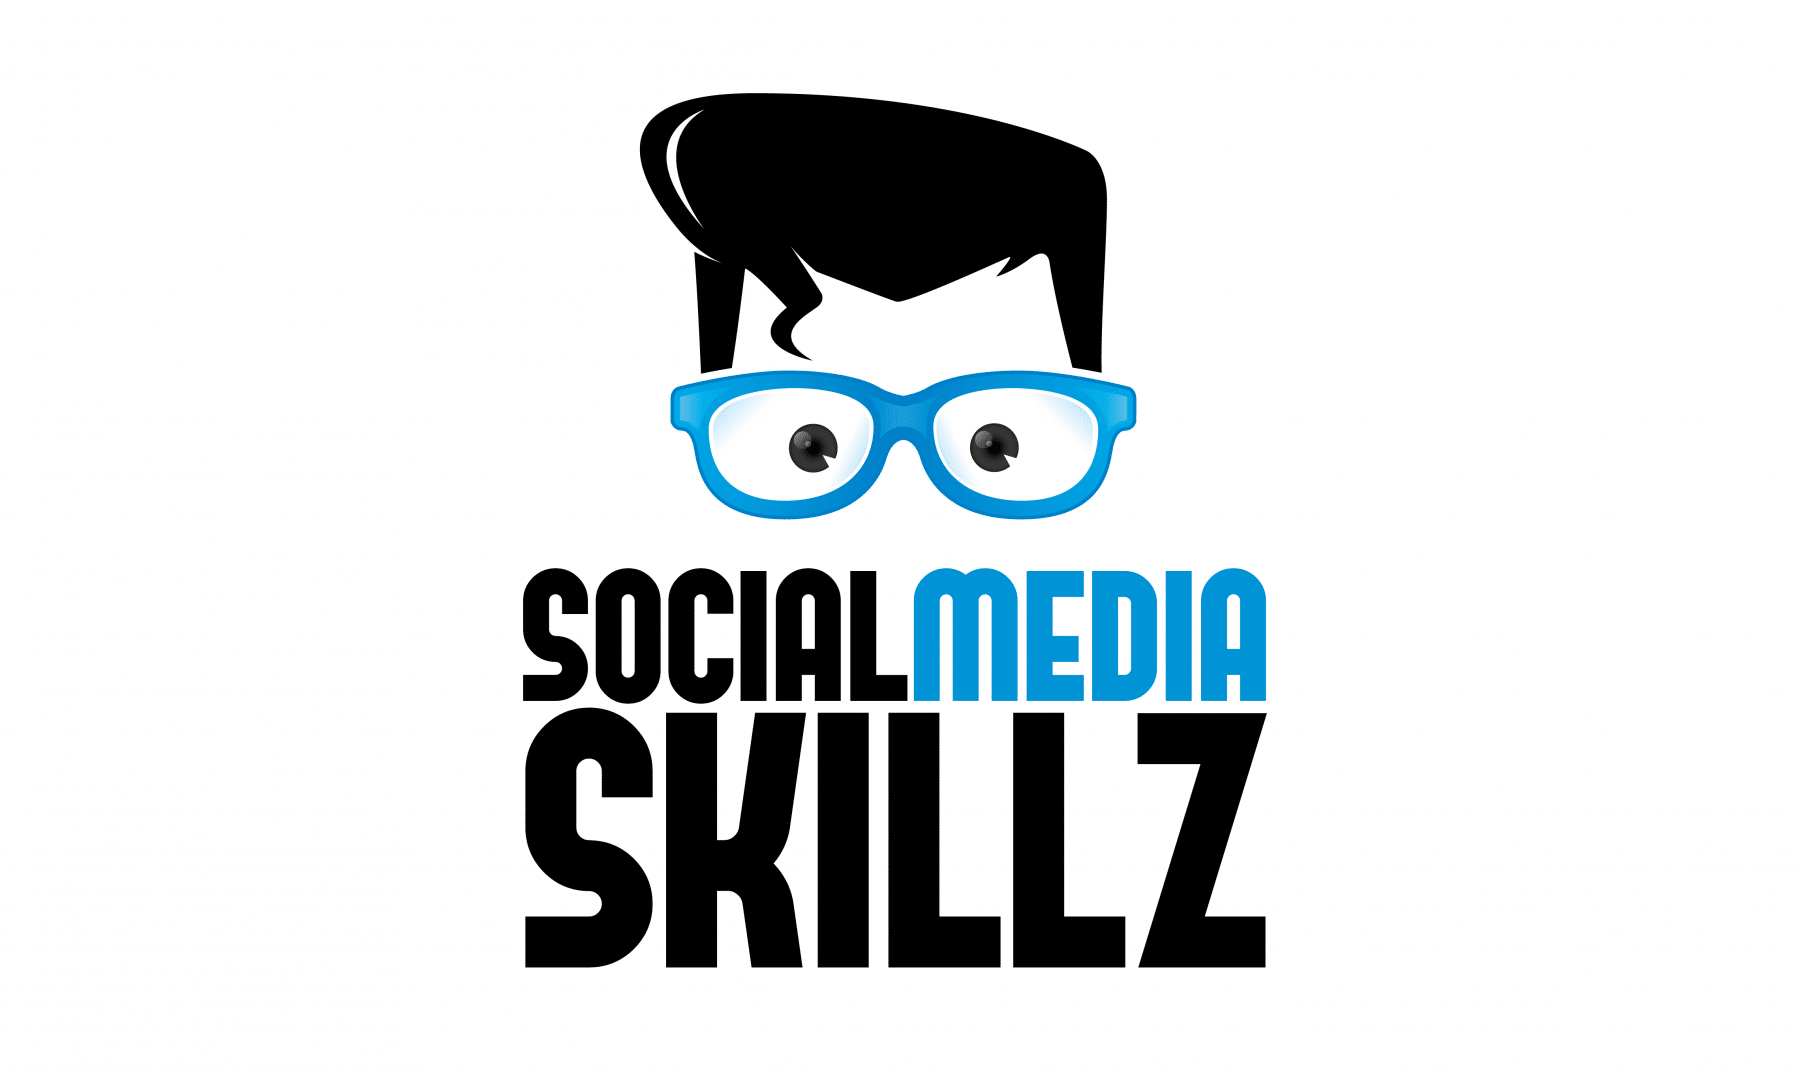 Social Meda Skillz Graphic